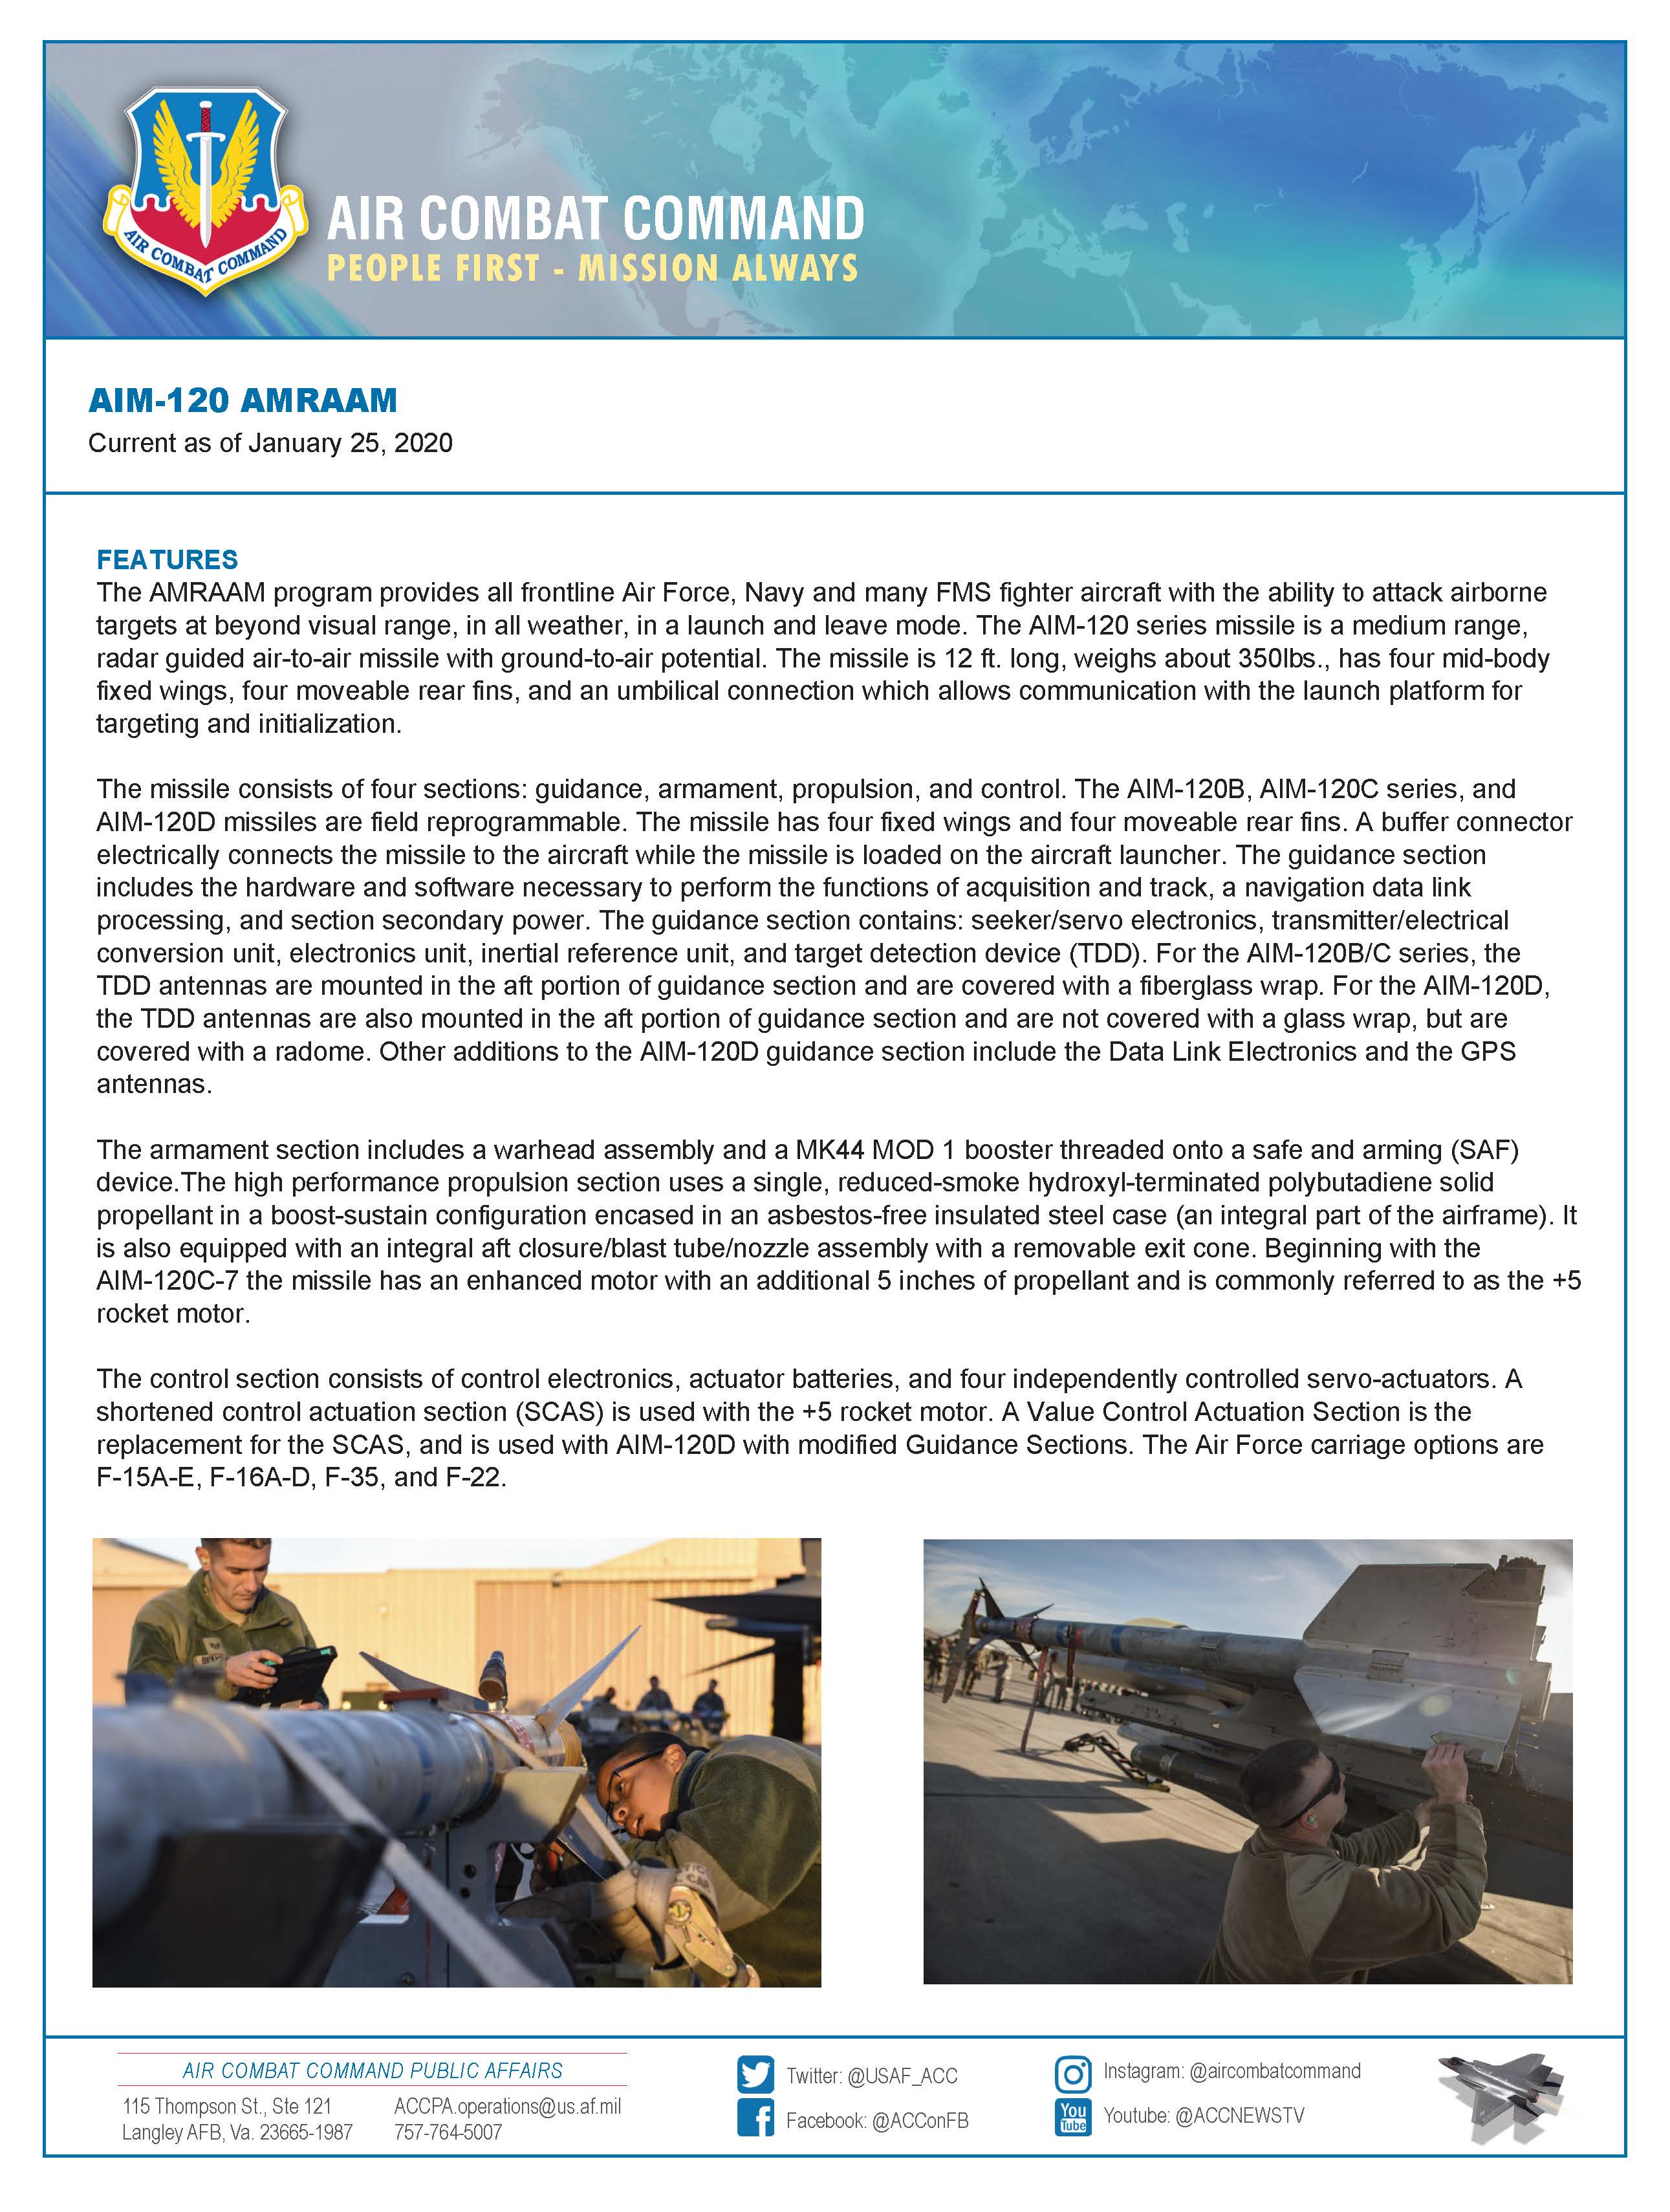 AIM-120 AMRAAM Fact Sheet